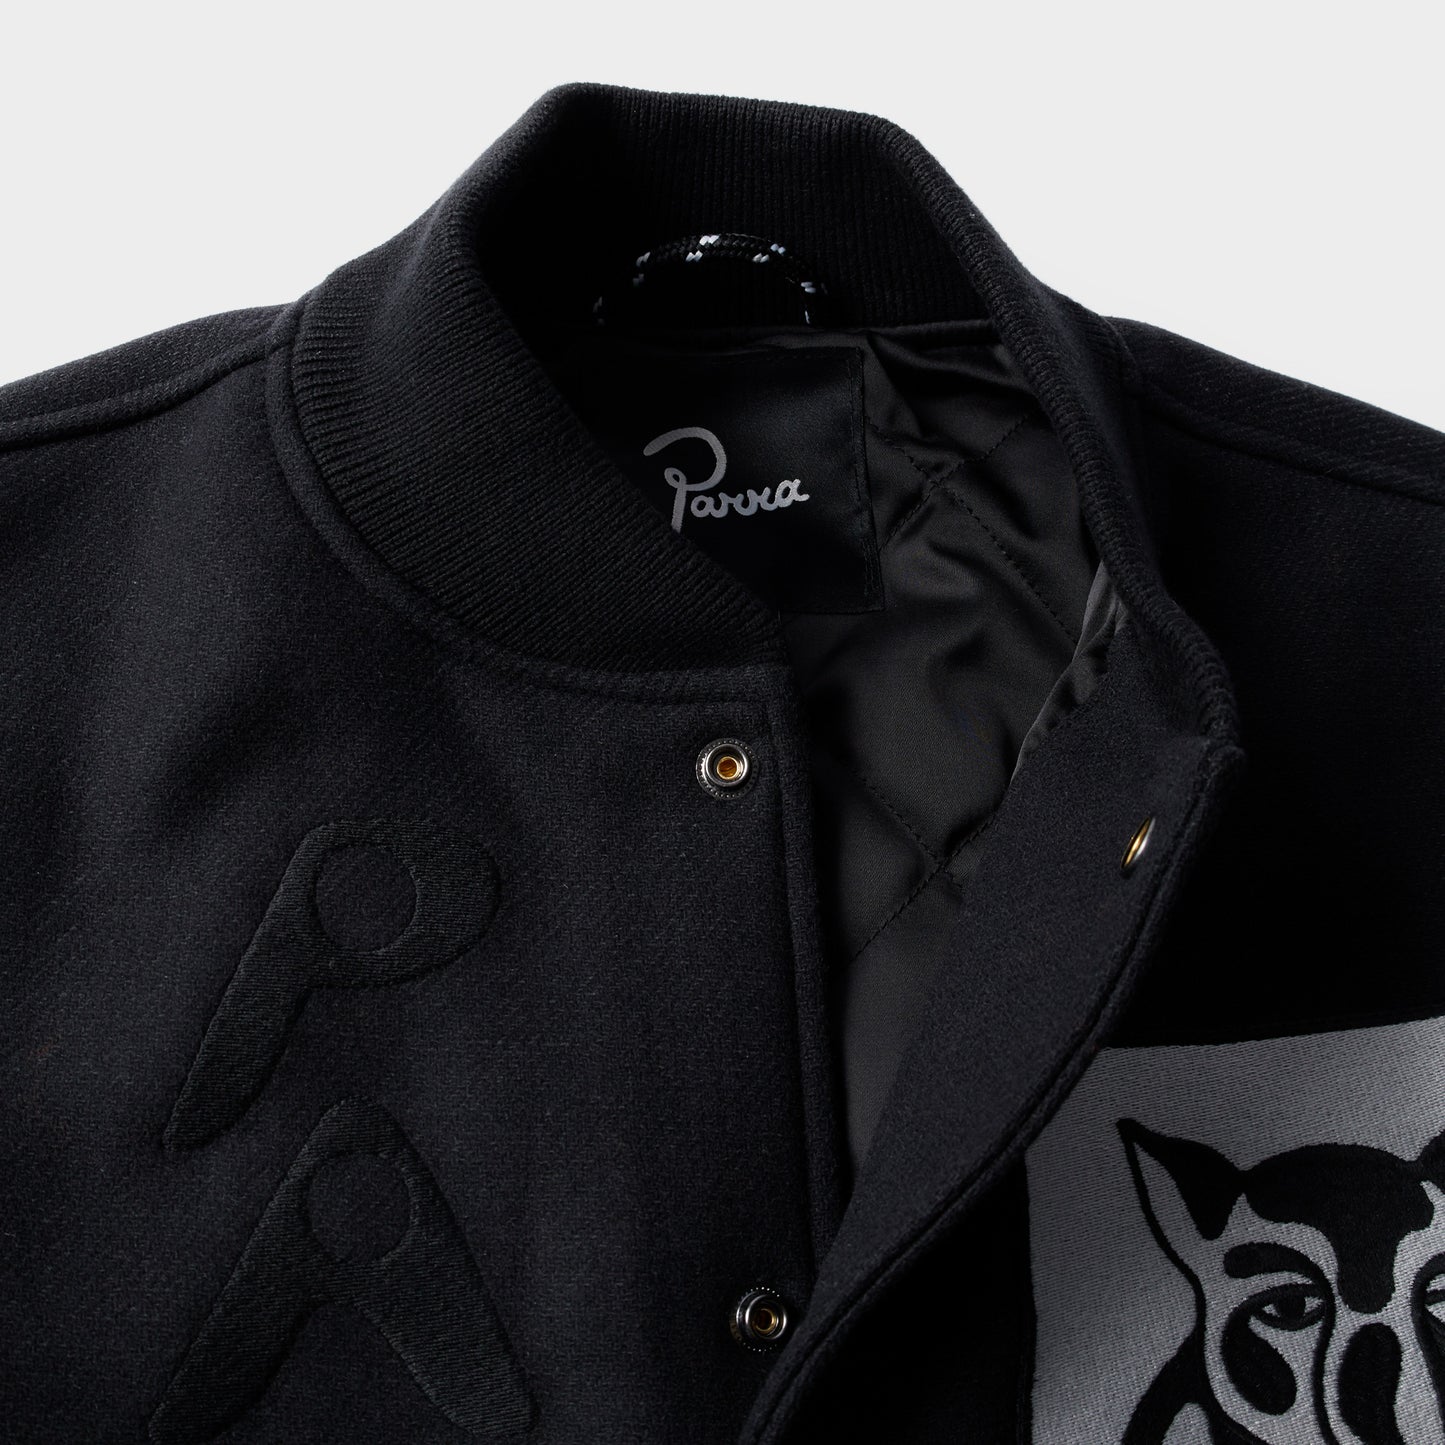 Parra Dog Faced Varsity Jacket in Farbe black